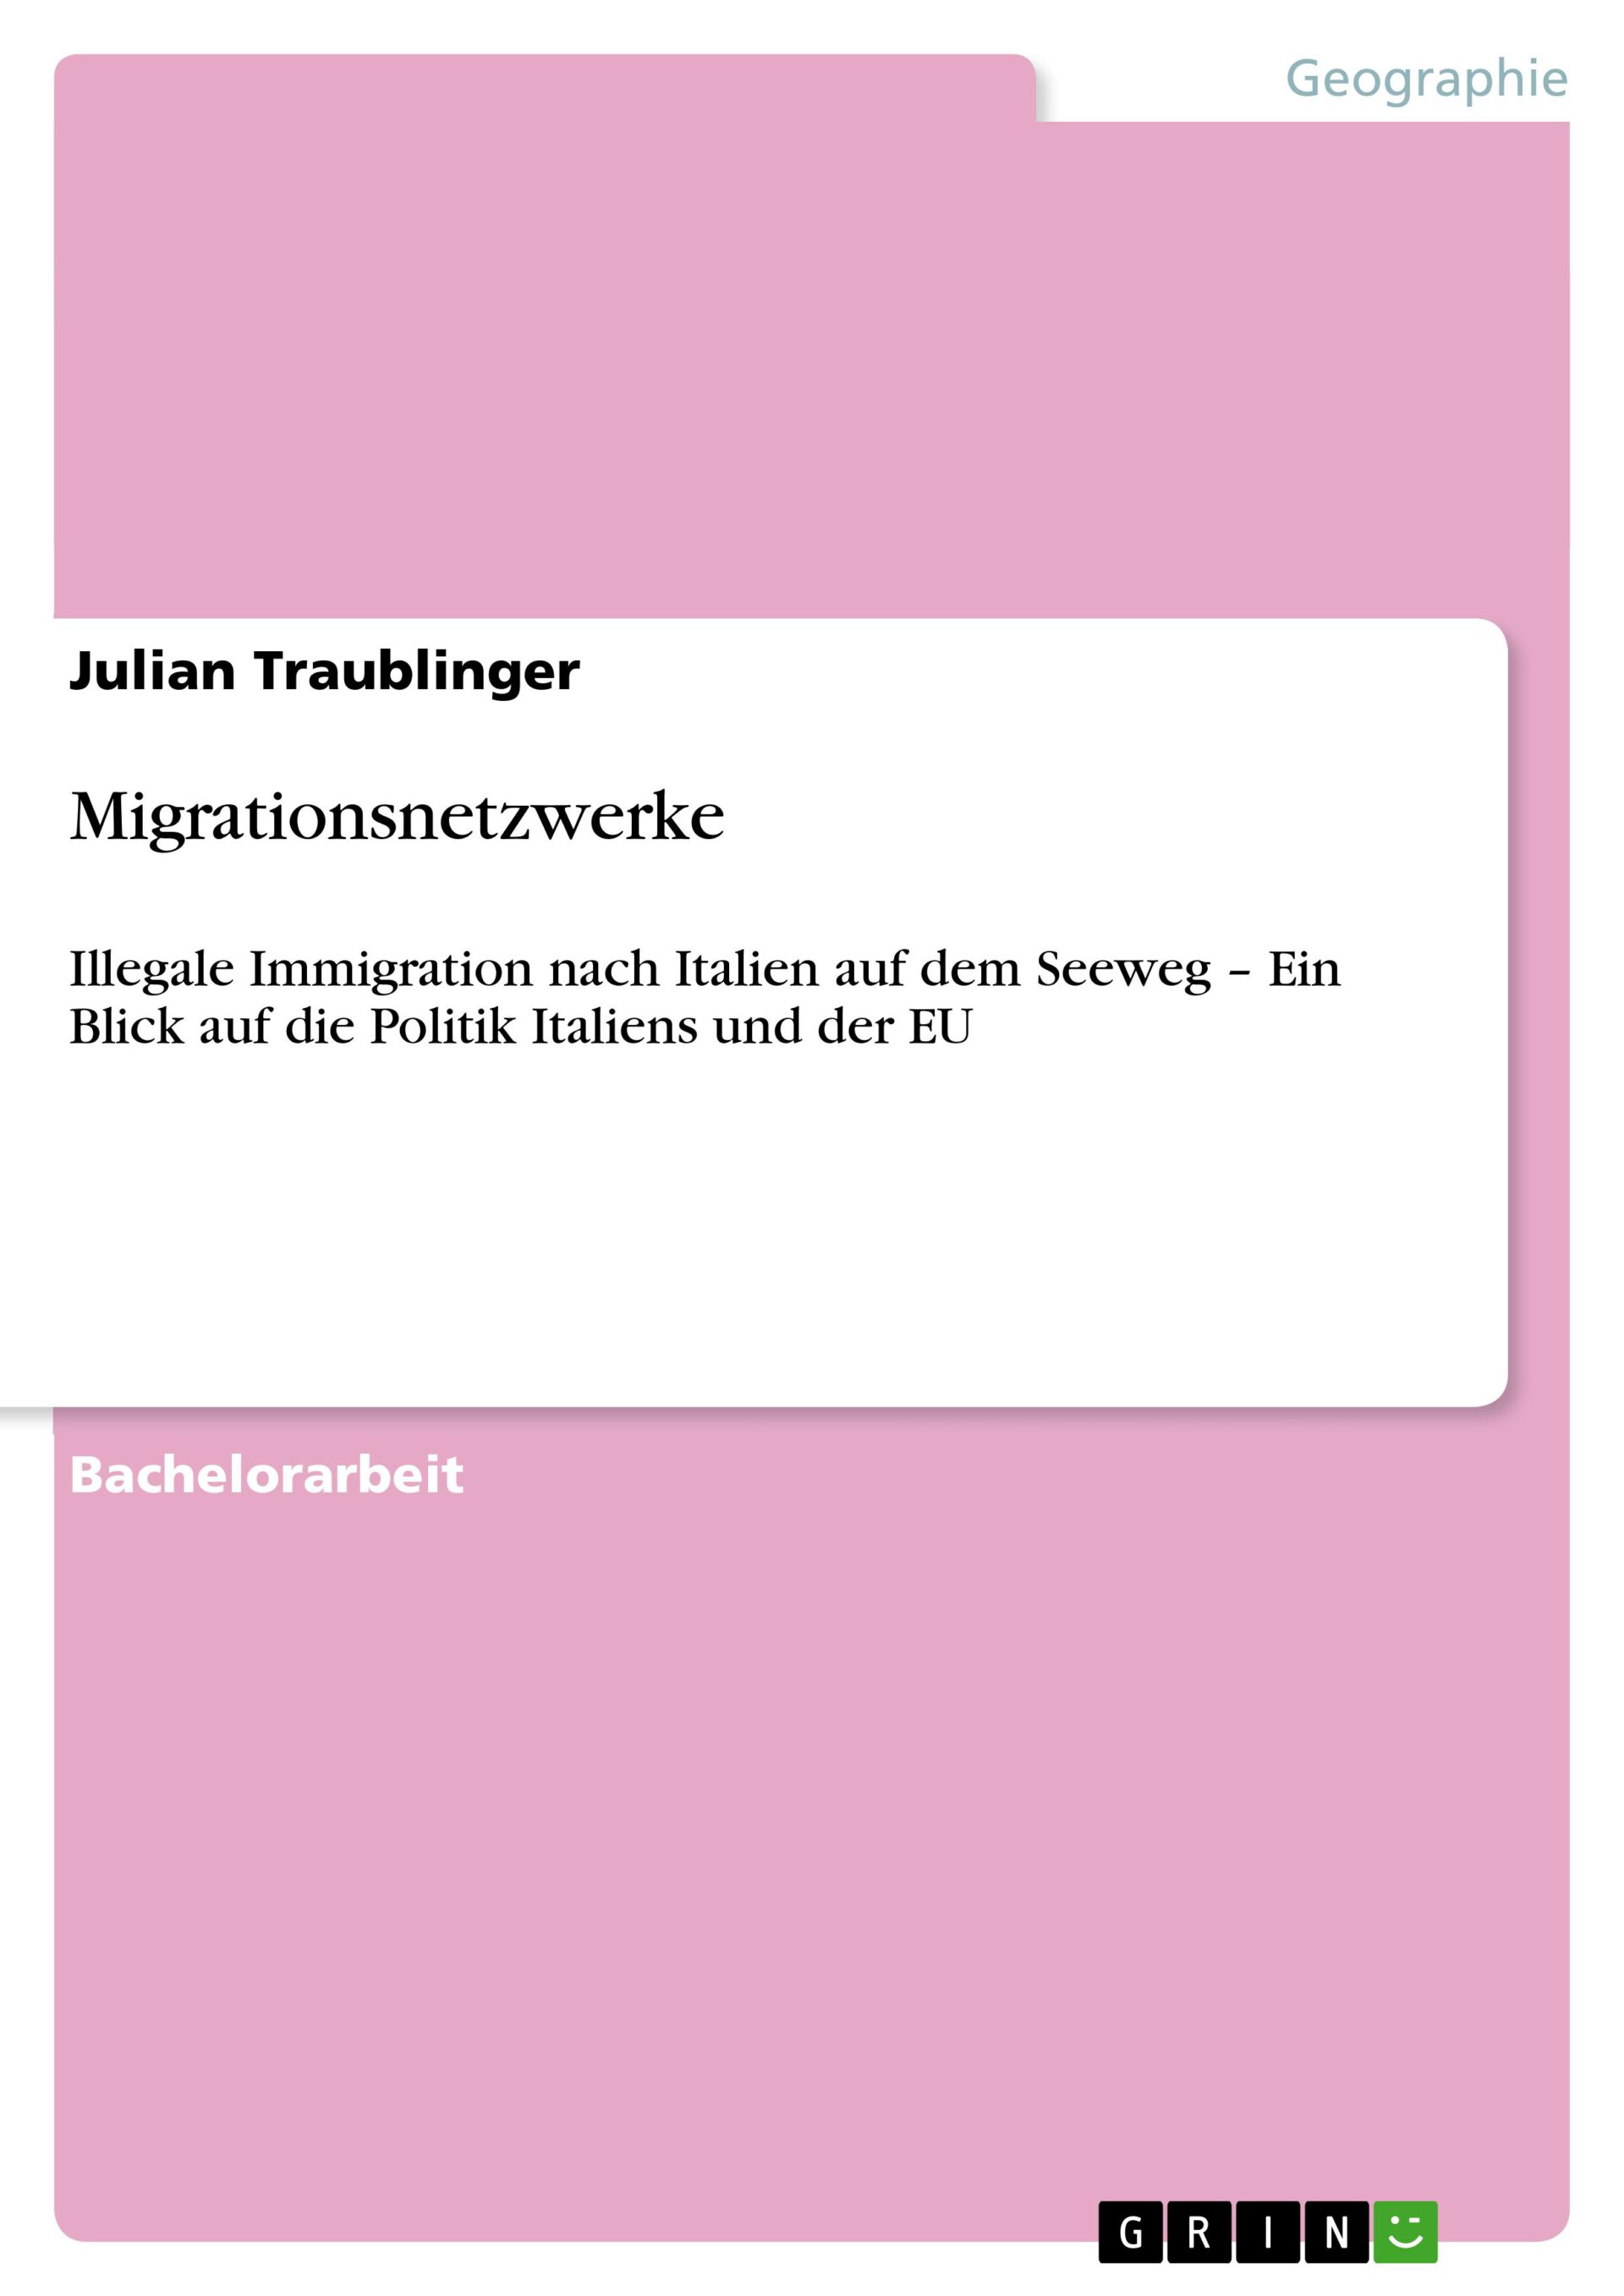 Buchcover: Migrationsnetzwerke, Julian Traublinger